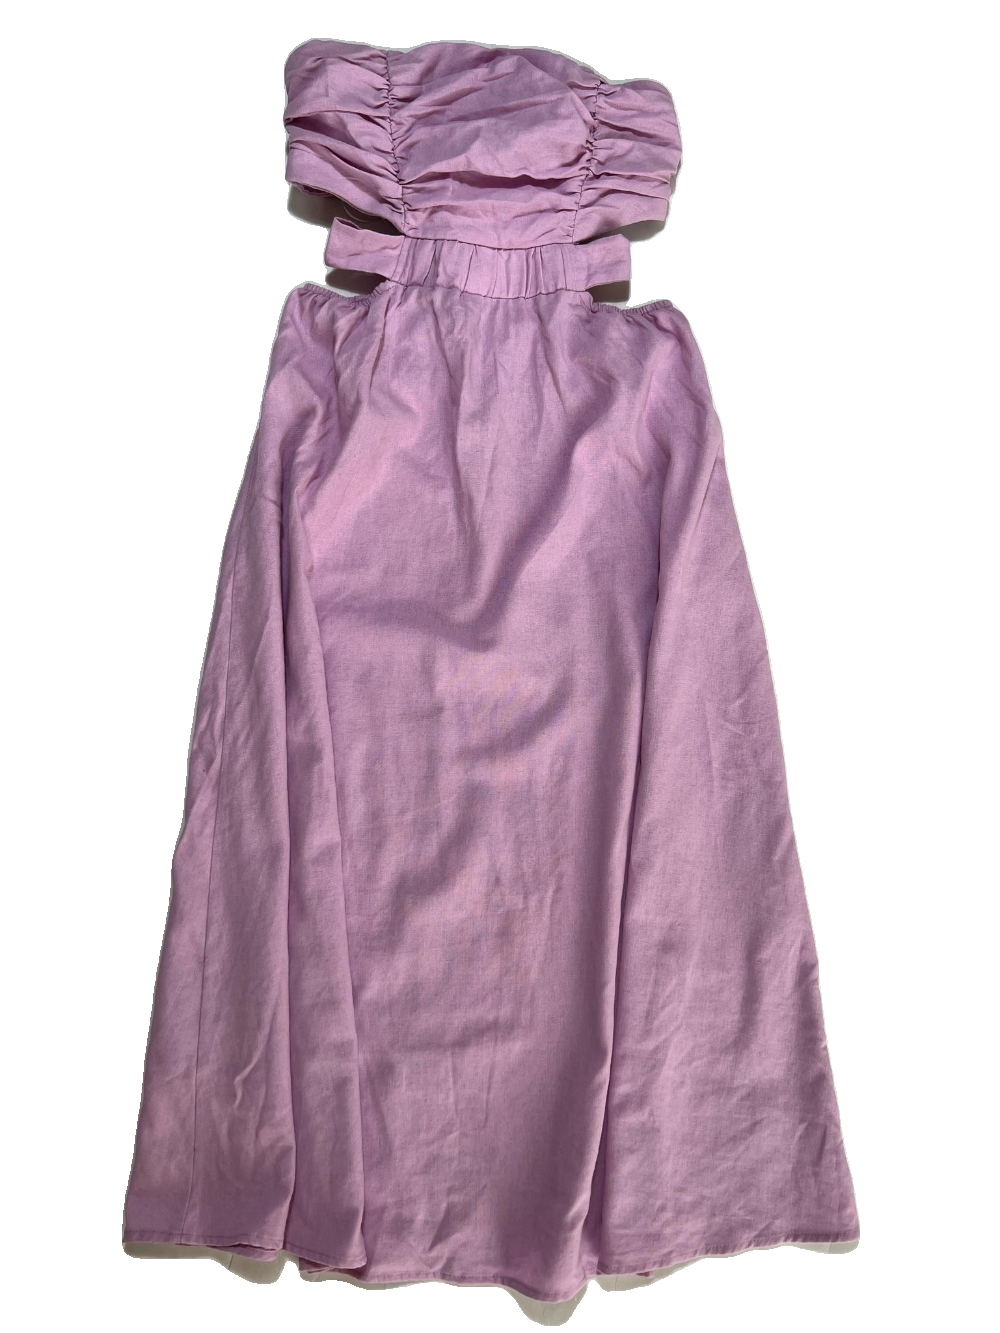 Shareen Collections- Purple Strapless Dress